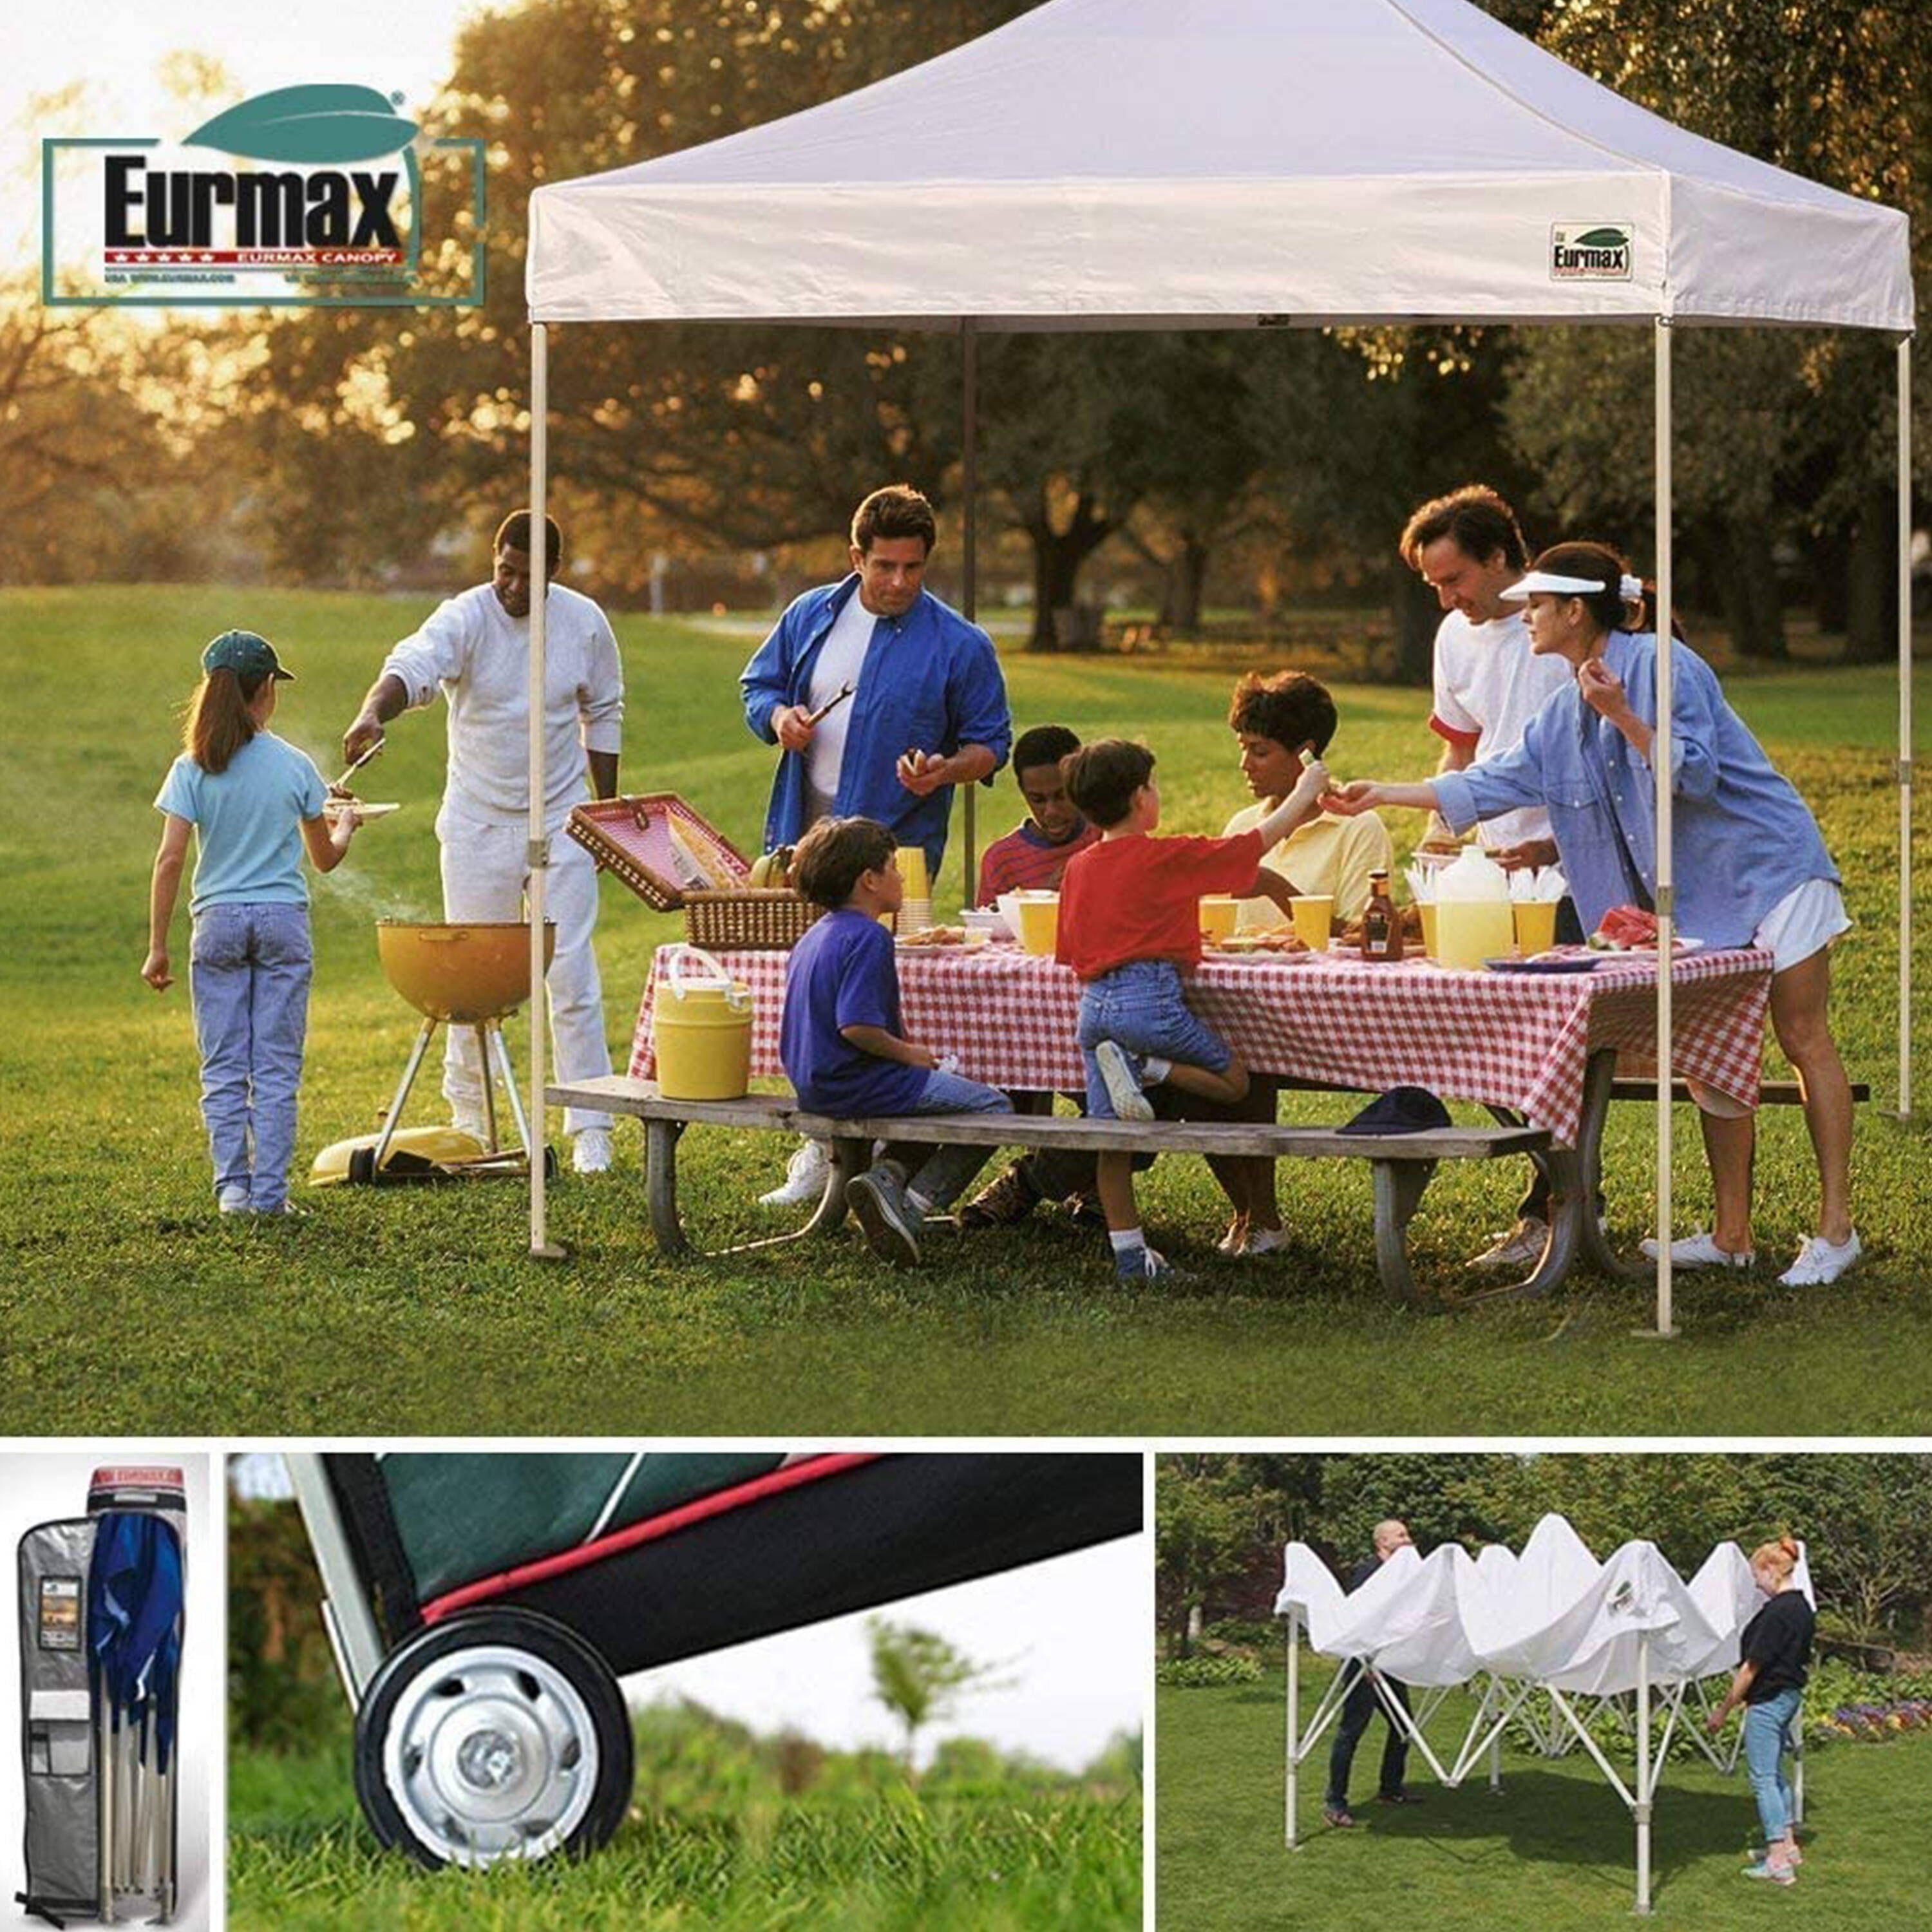 Eurmax 5x5 Pop up Canopy Outdoor Heavy Duty Tent,Field Green